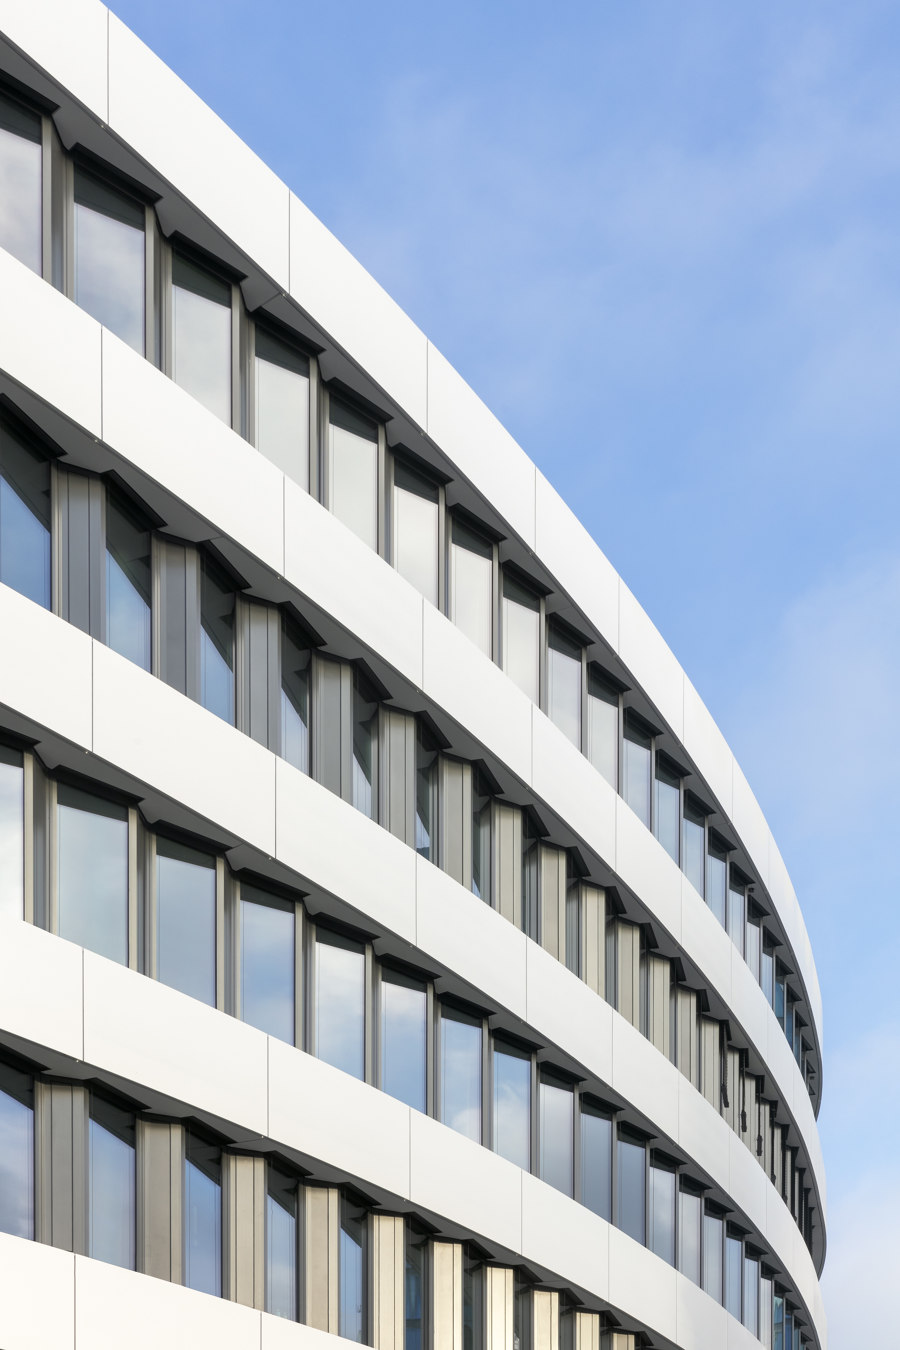 trivago Headquarter, Düsseldorf de slapa oberholz pszczulny | sop architekten | Immeubles de bureaux